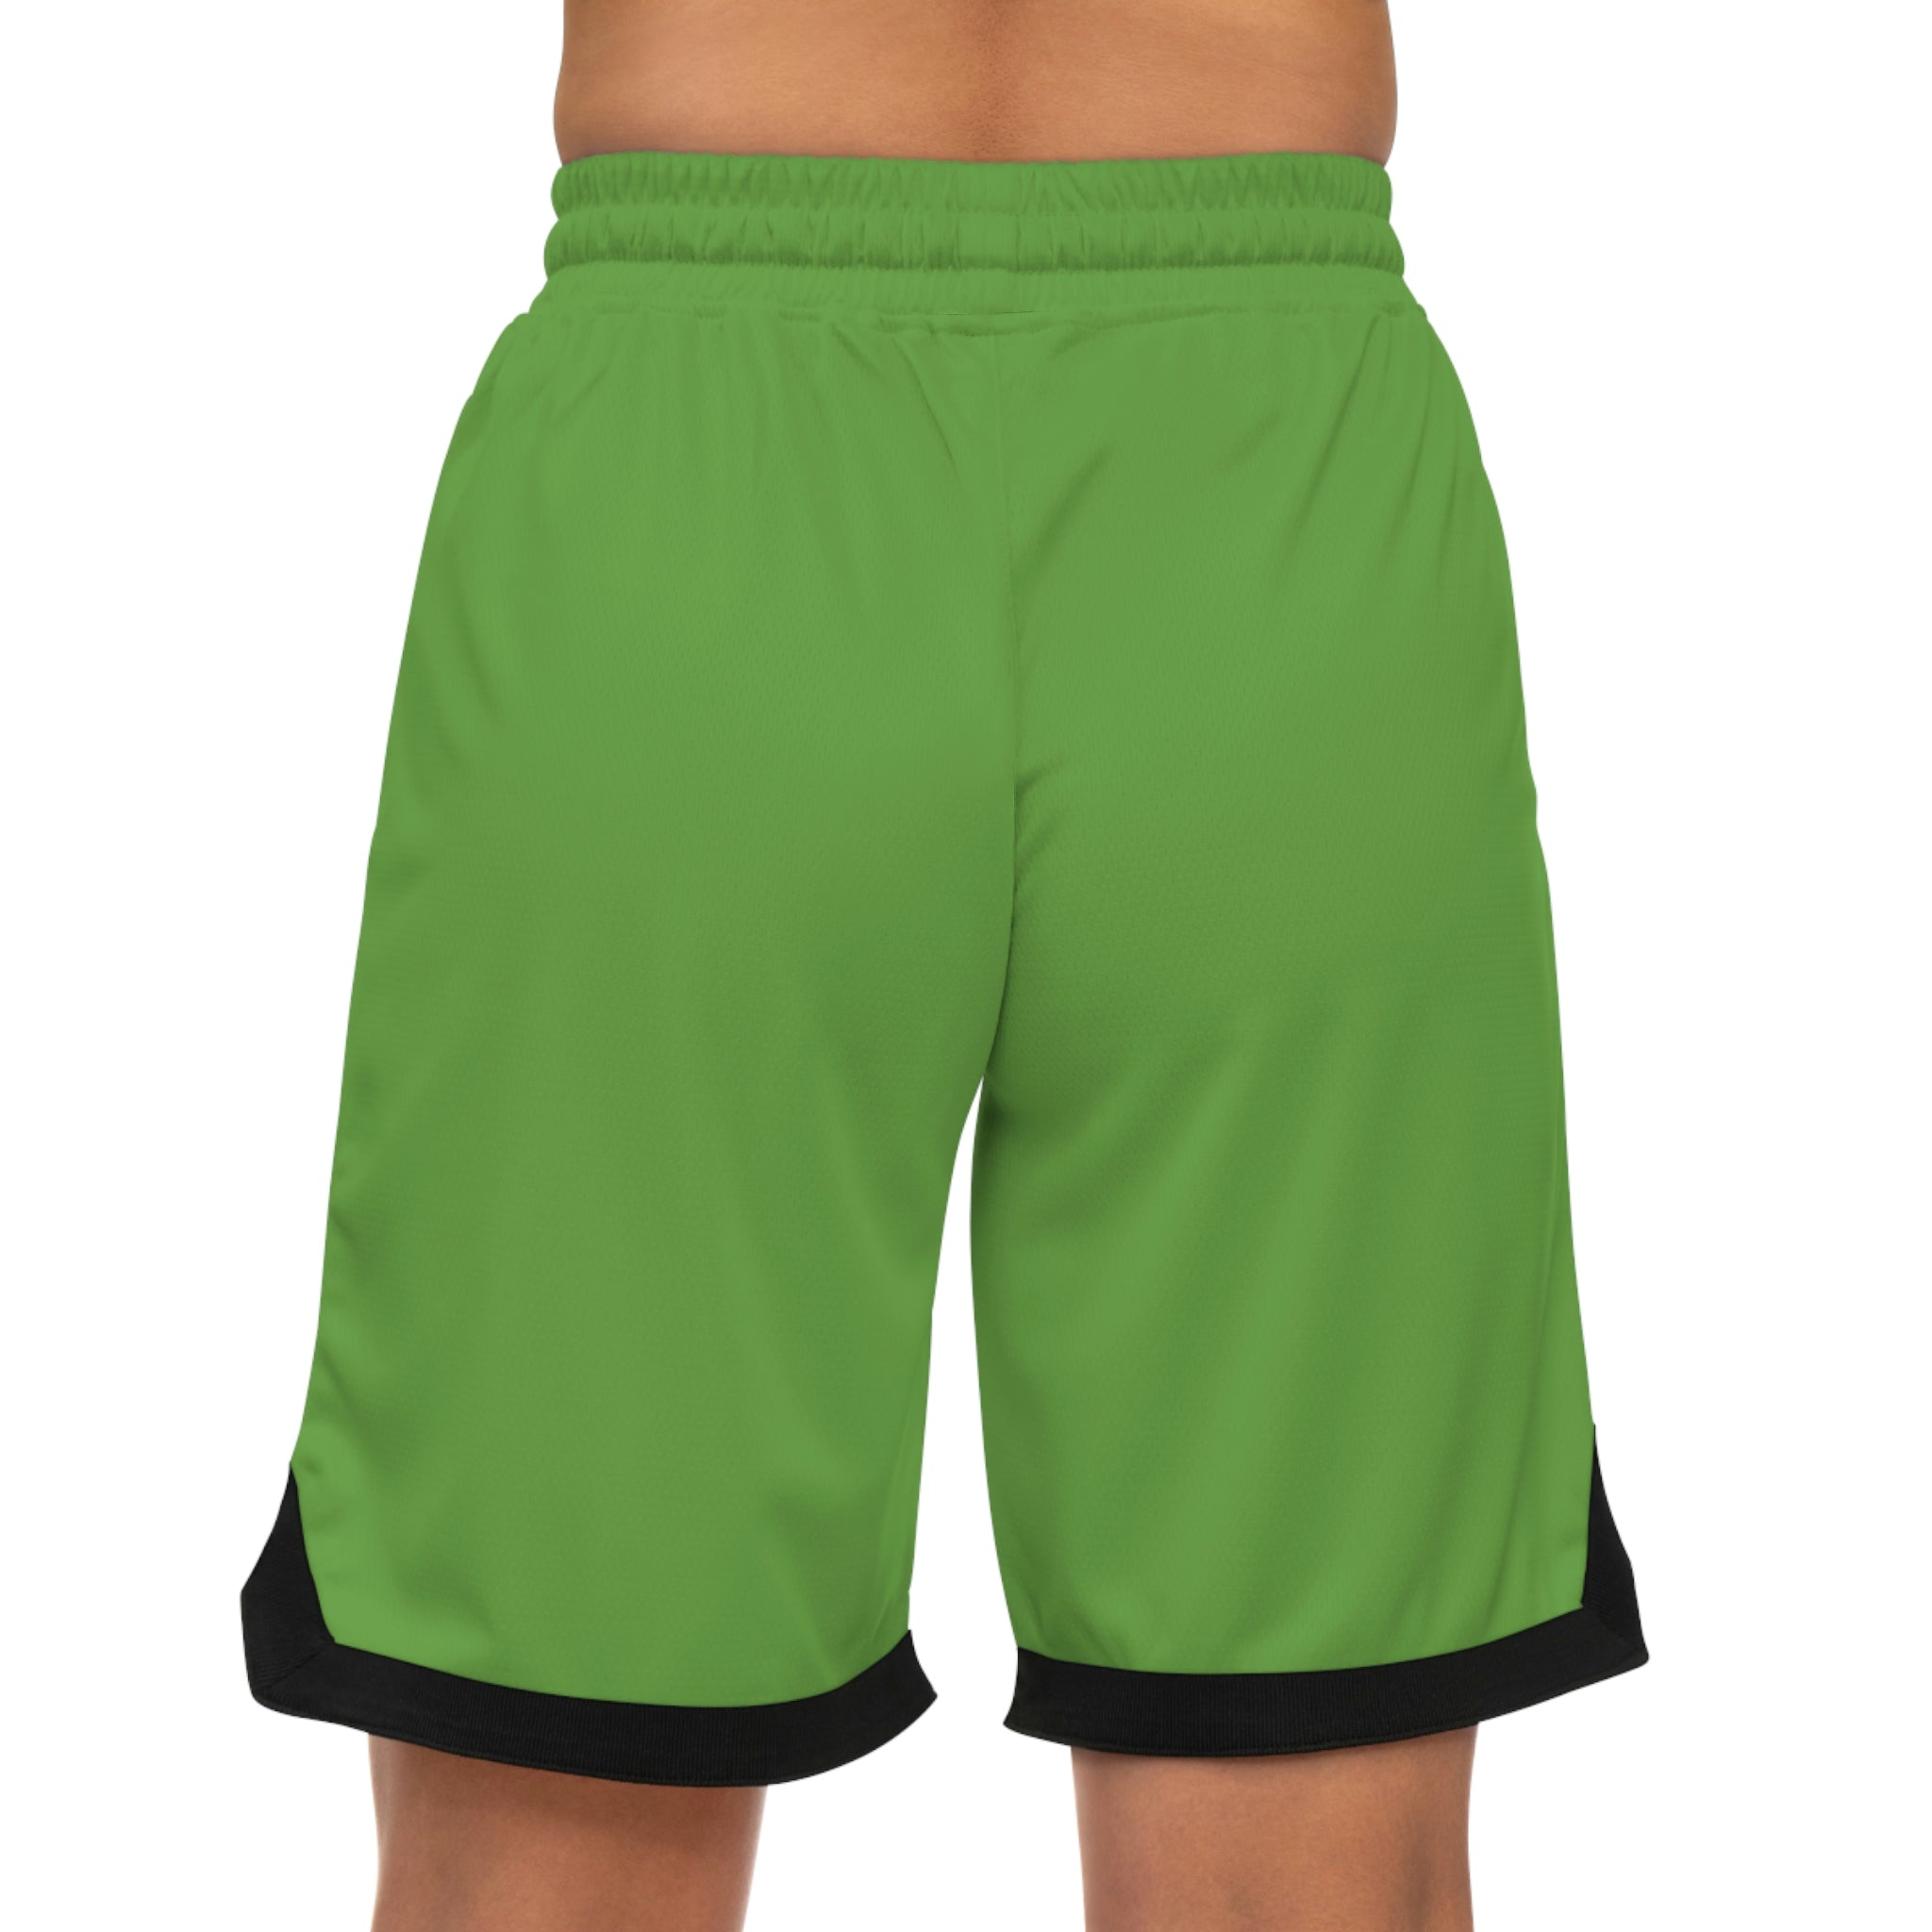 Combinedminds Basketball Shorts Green/Black Logo